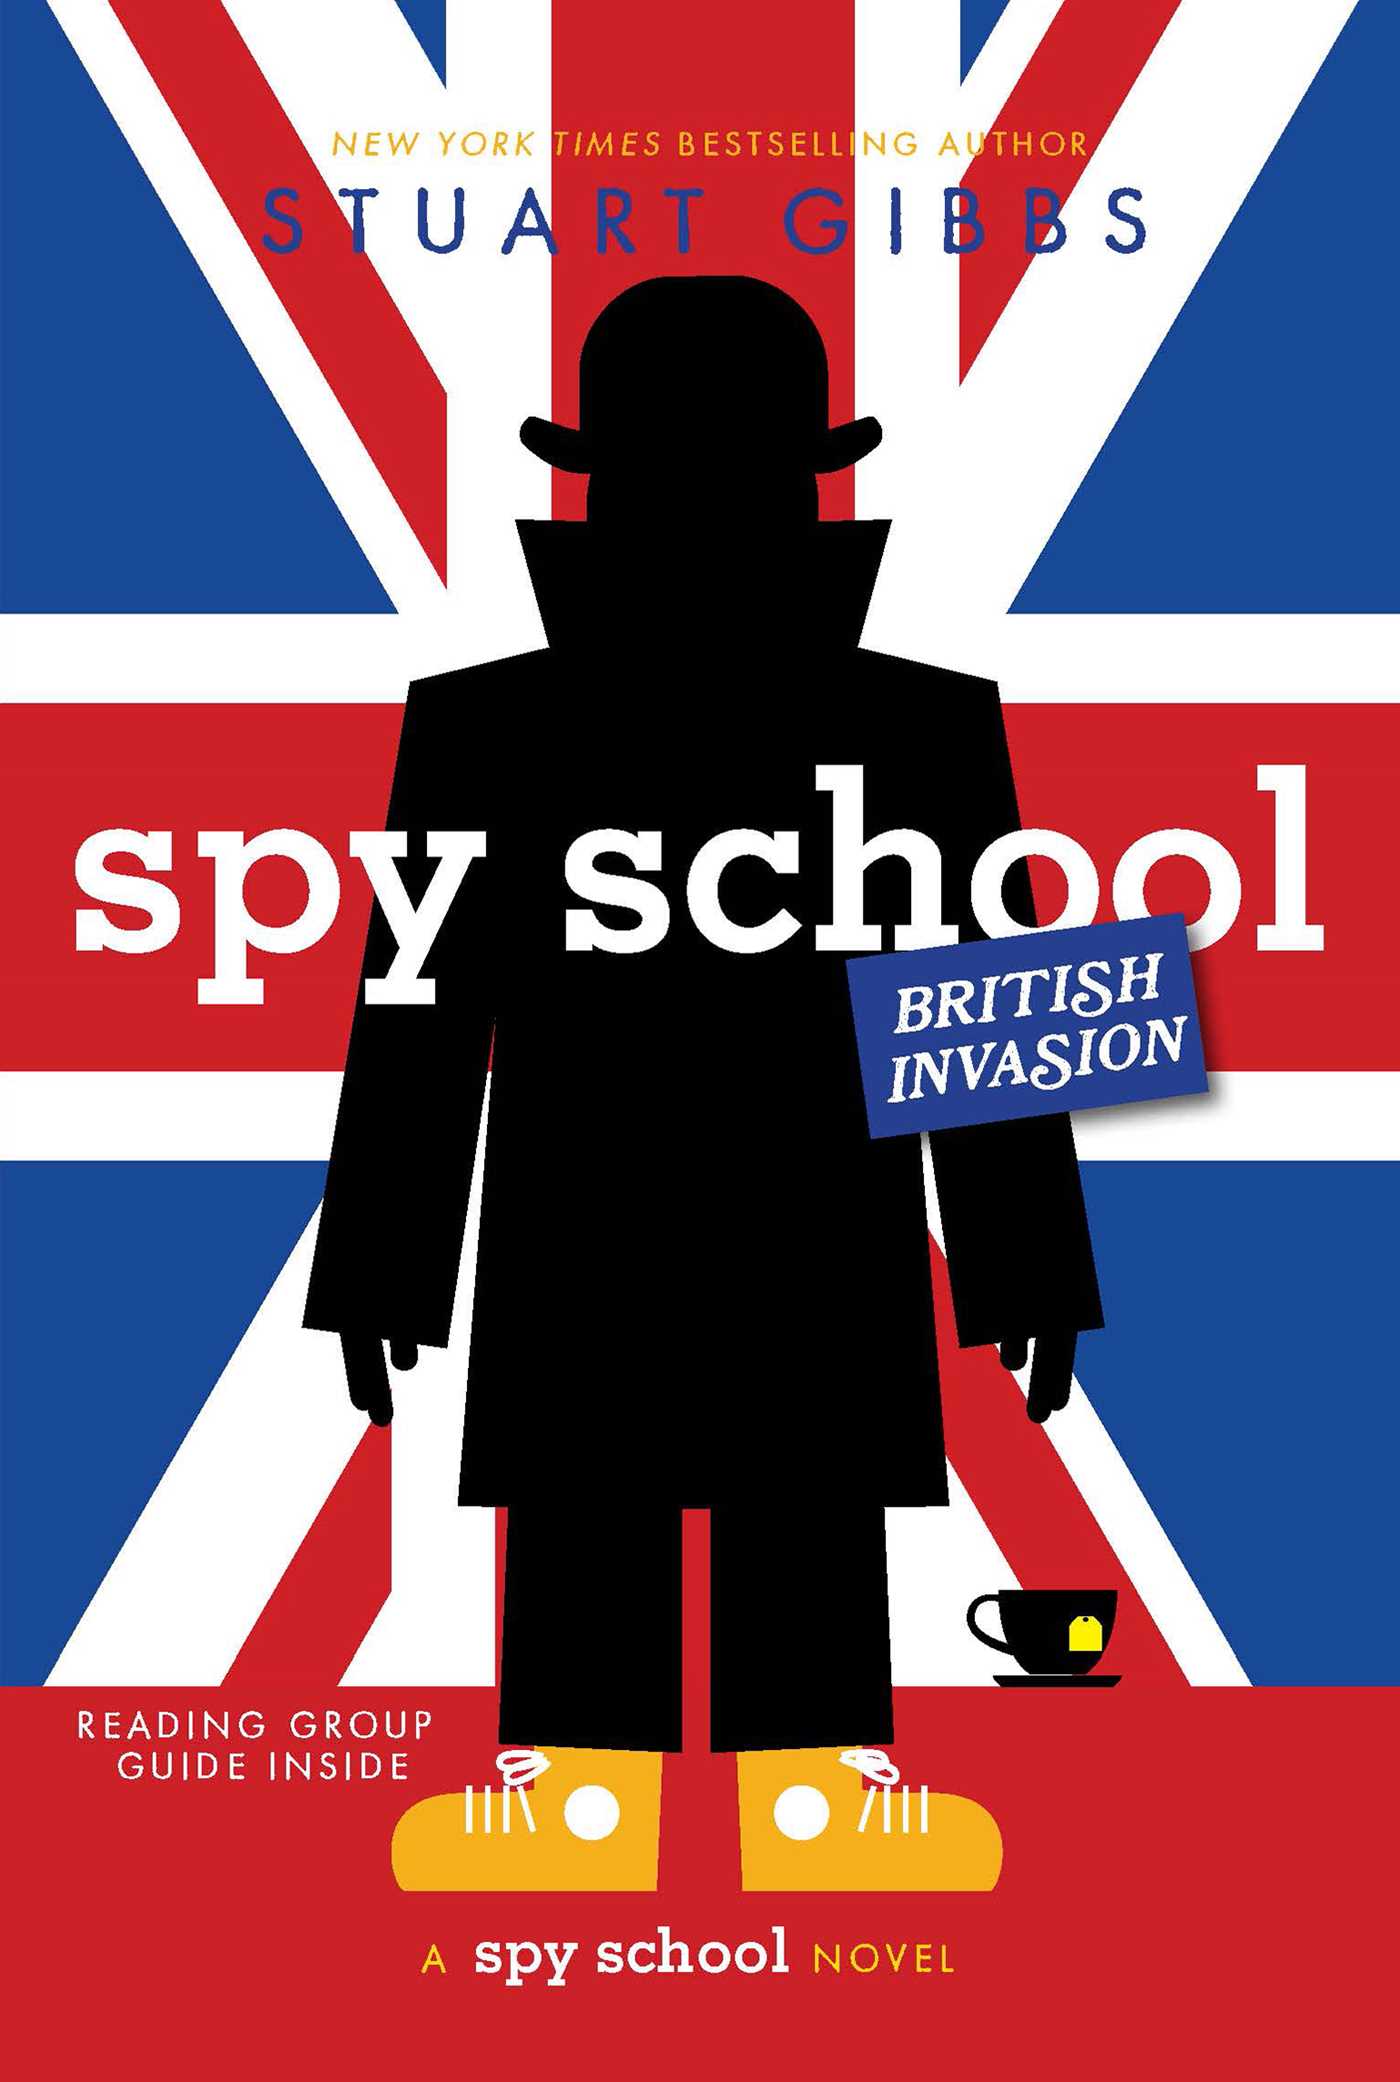 Spy School British Invasion | 9-12 years old